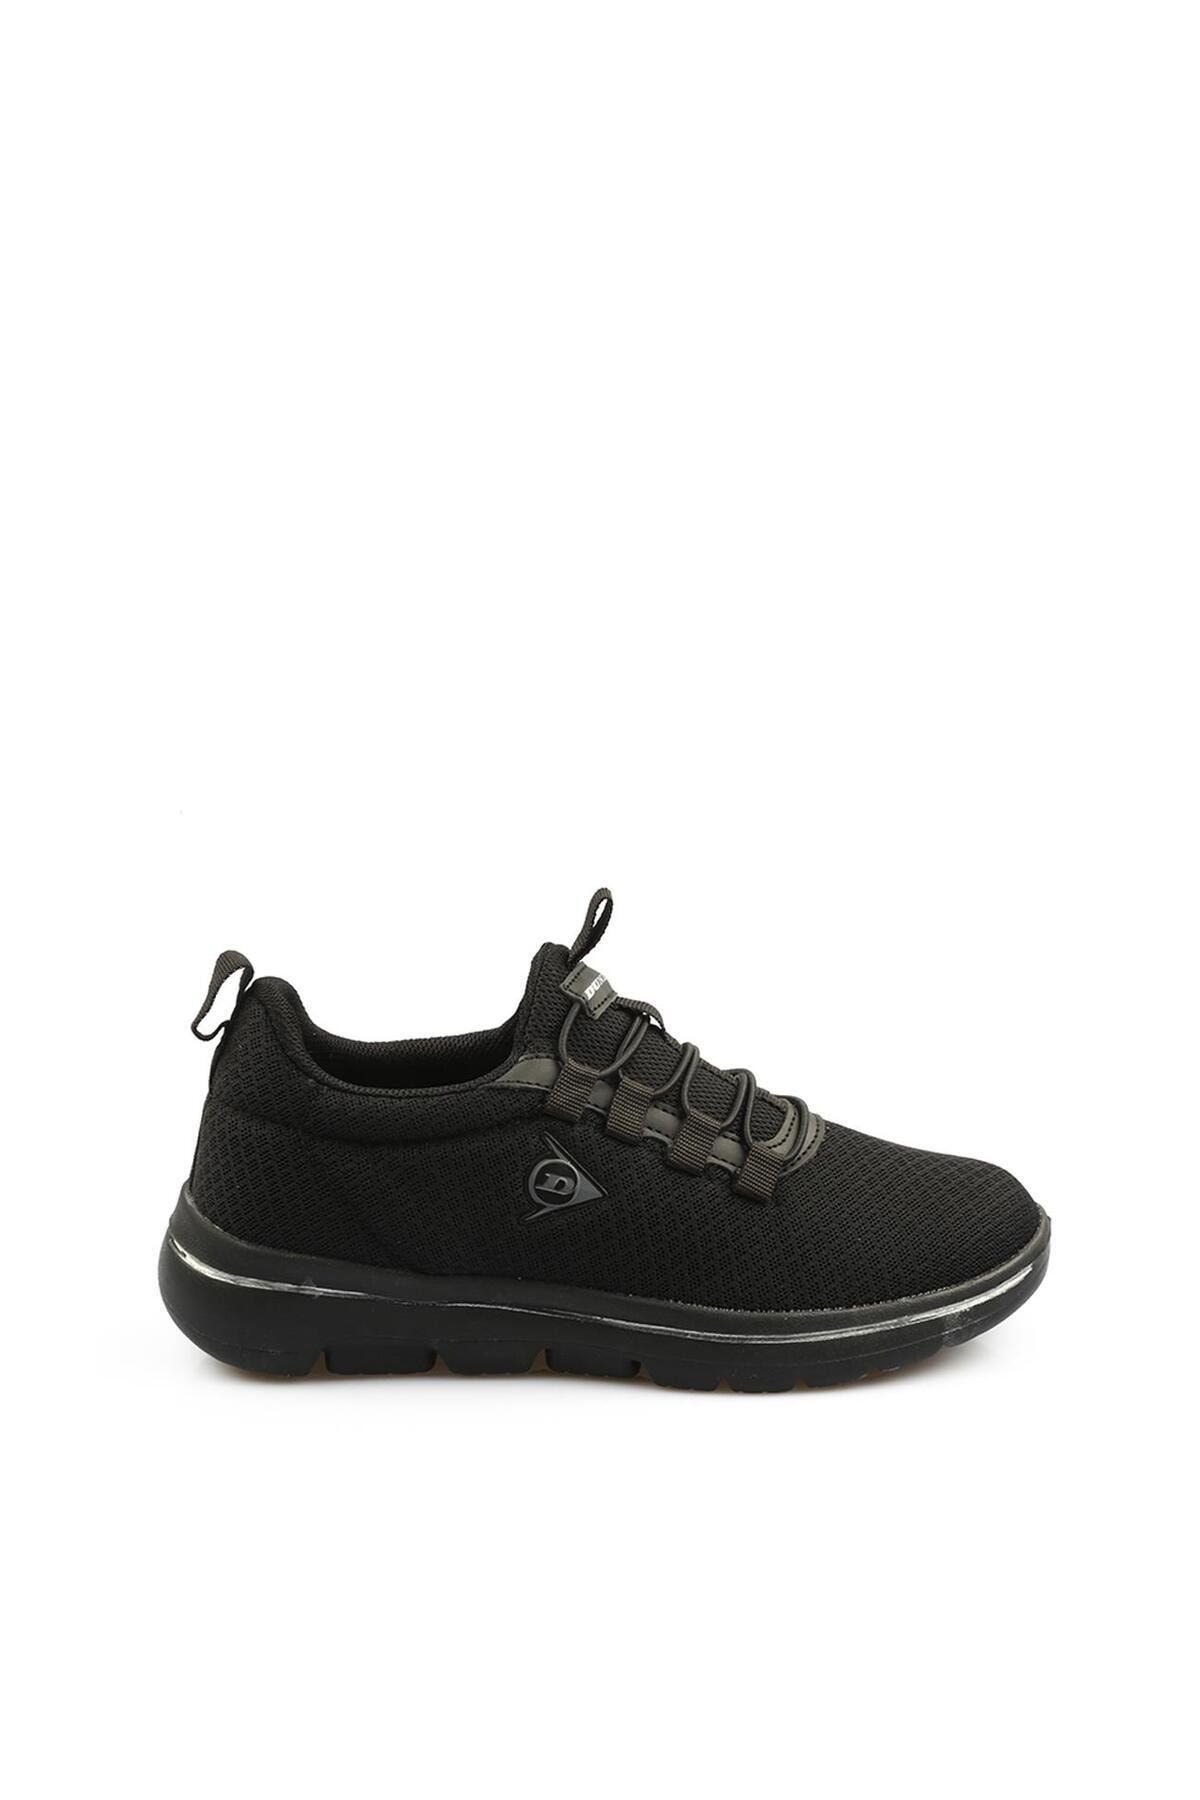 Dunlop ® | DNP-2285-3238 Siyah Siyah - Kadın Spor Ayakkabı